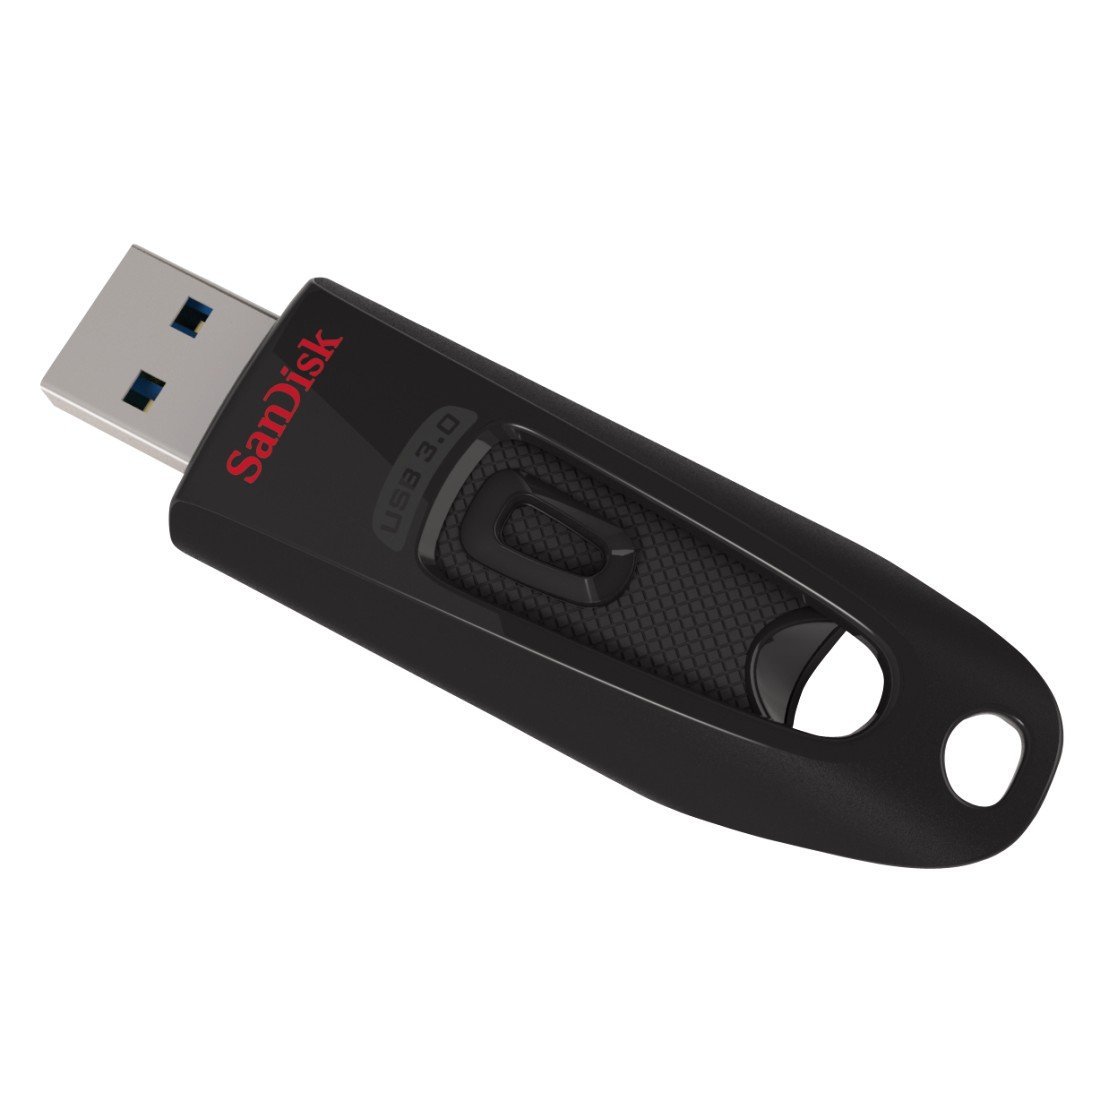 Картинка - 1 USB накопитель SanDisk Ultra USB 3.0 64GB, SDCZ48-064G-U46